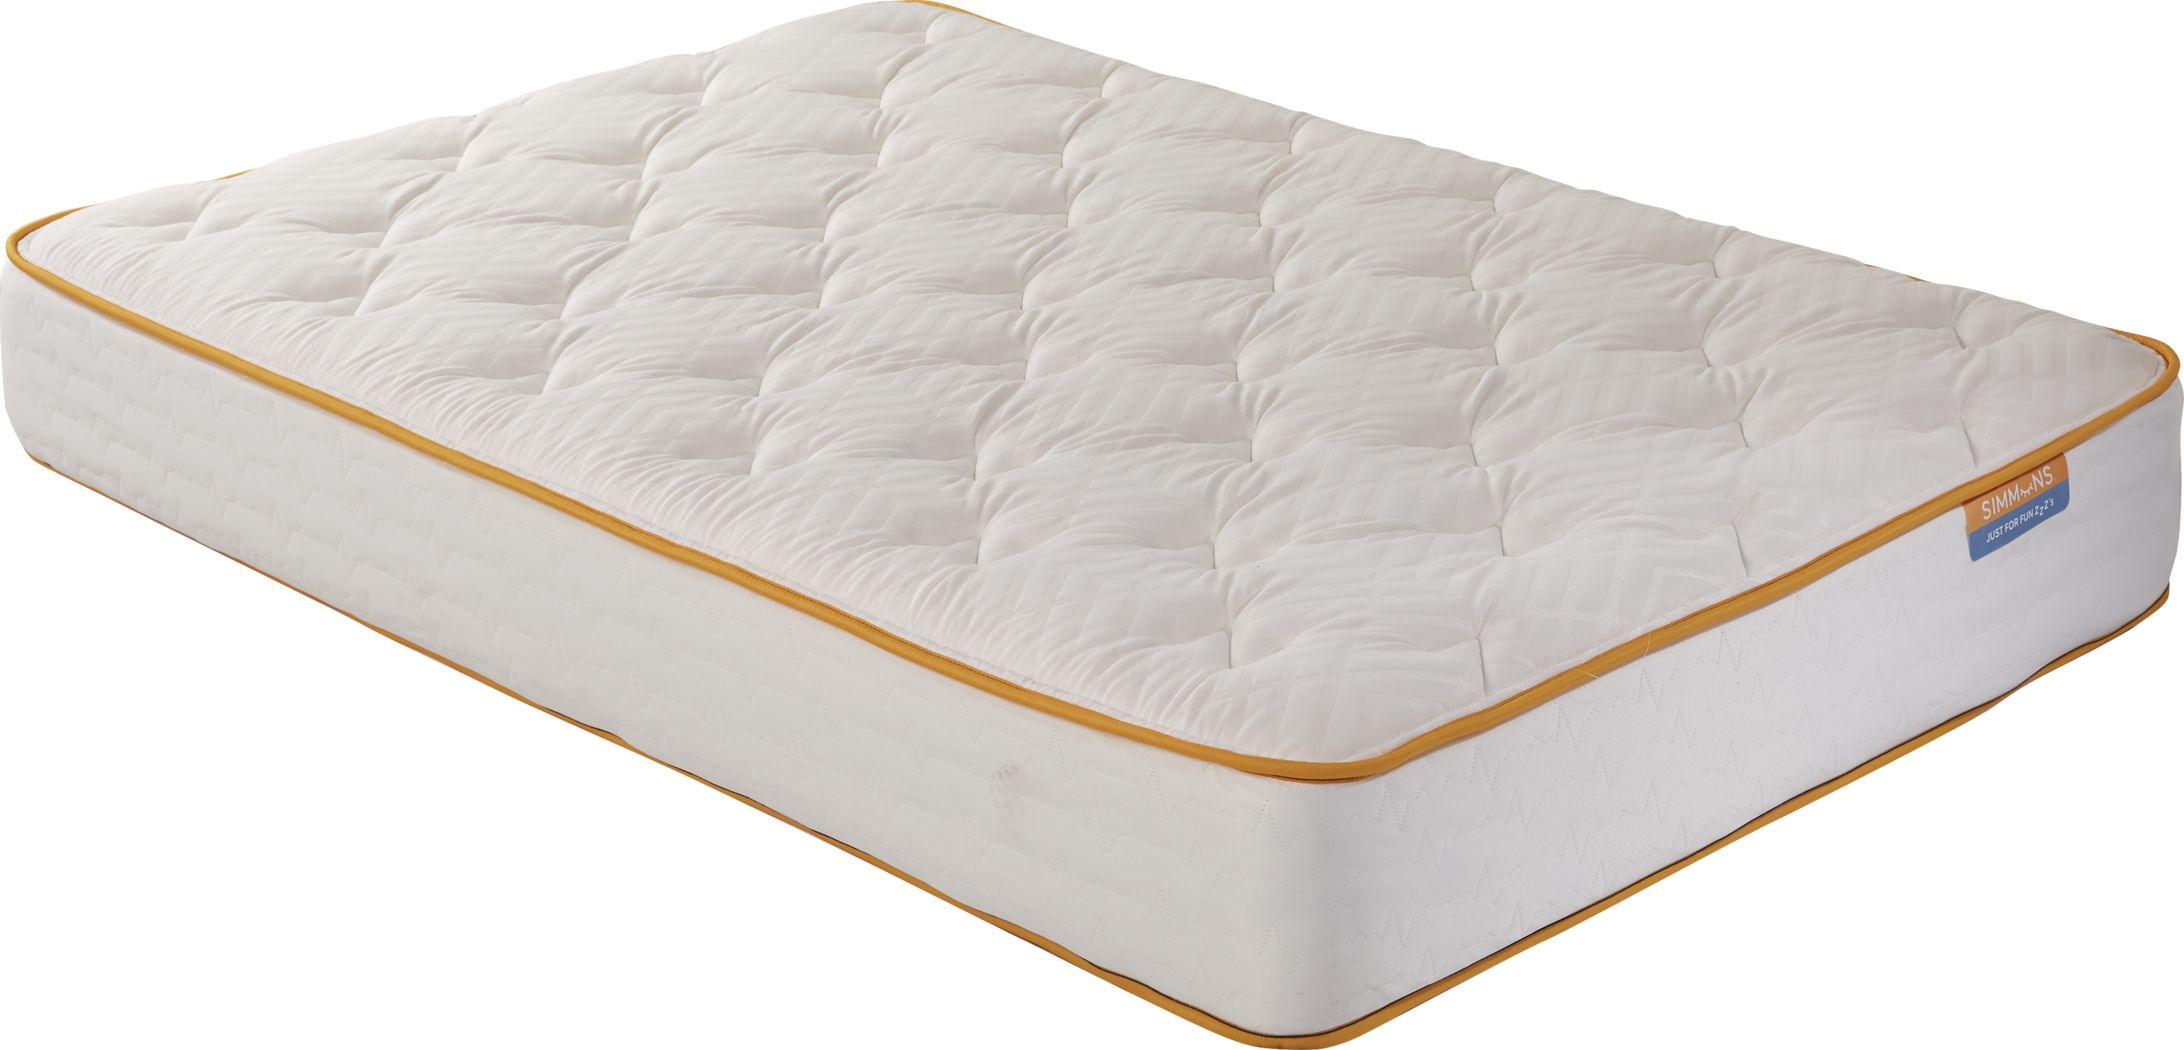 full mattress for sale greensboro nc